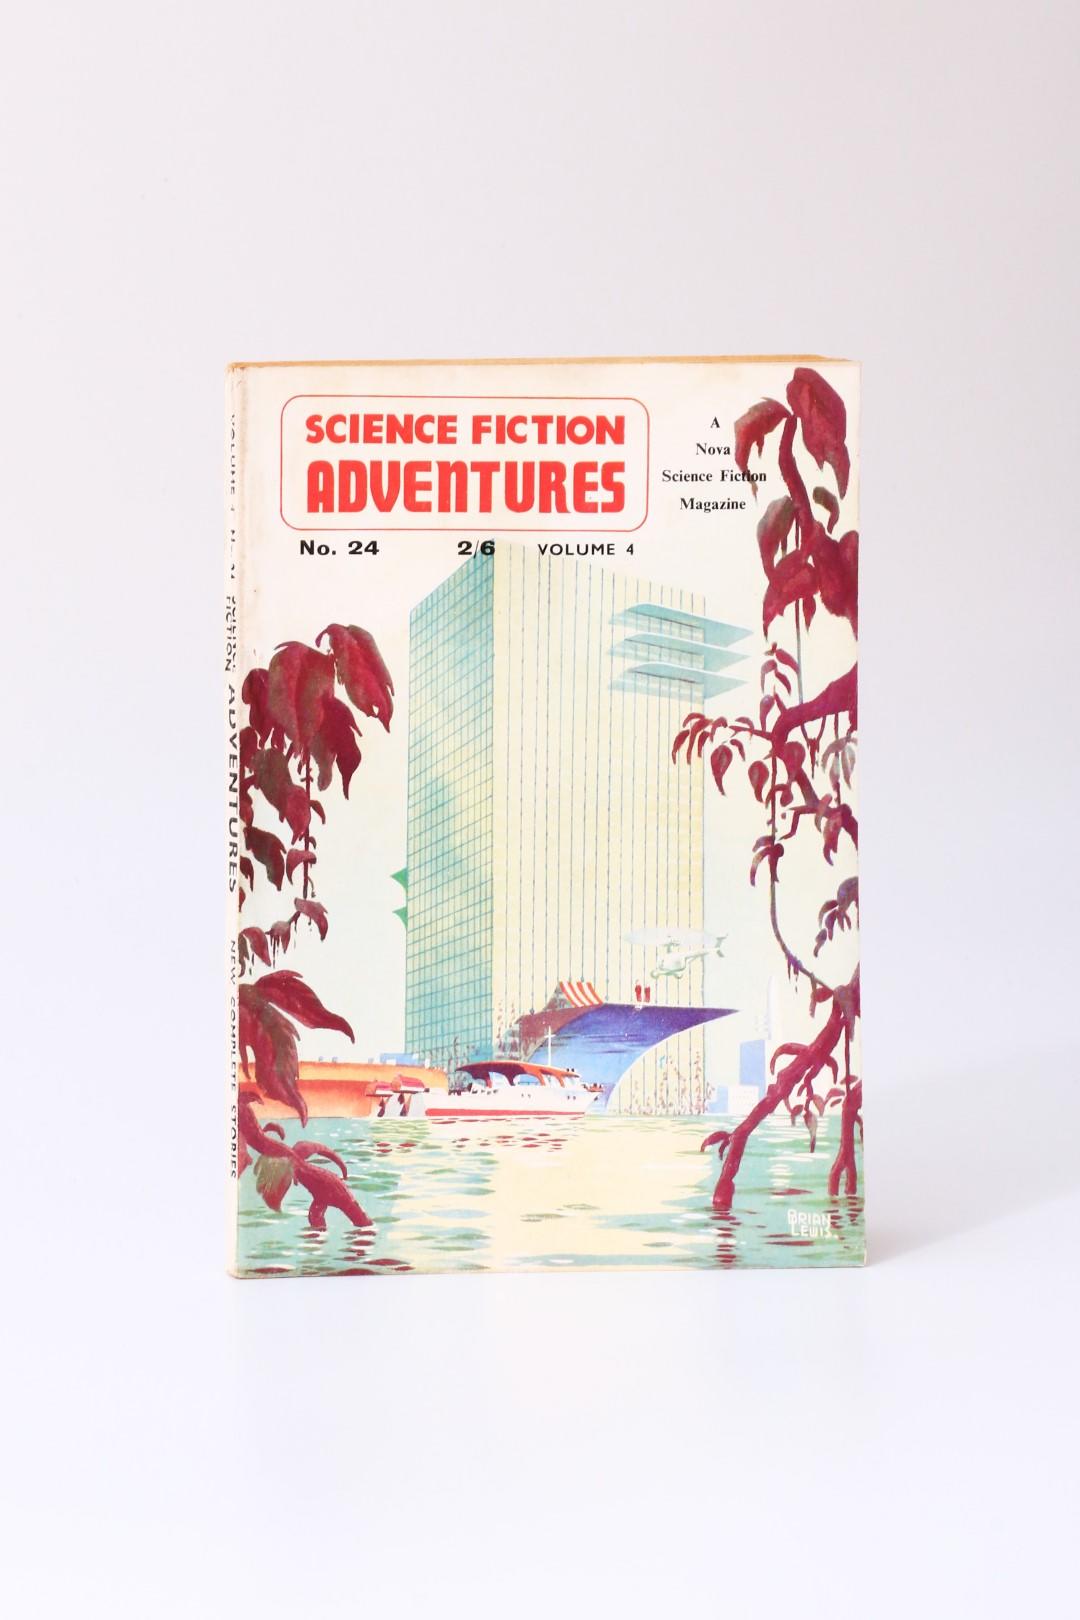 Various [J.G. Ballard interest] - Science Fiction Adventures [Volume 4, No. 24] - Nova Publications, 1962, First Edition.